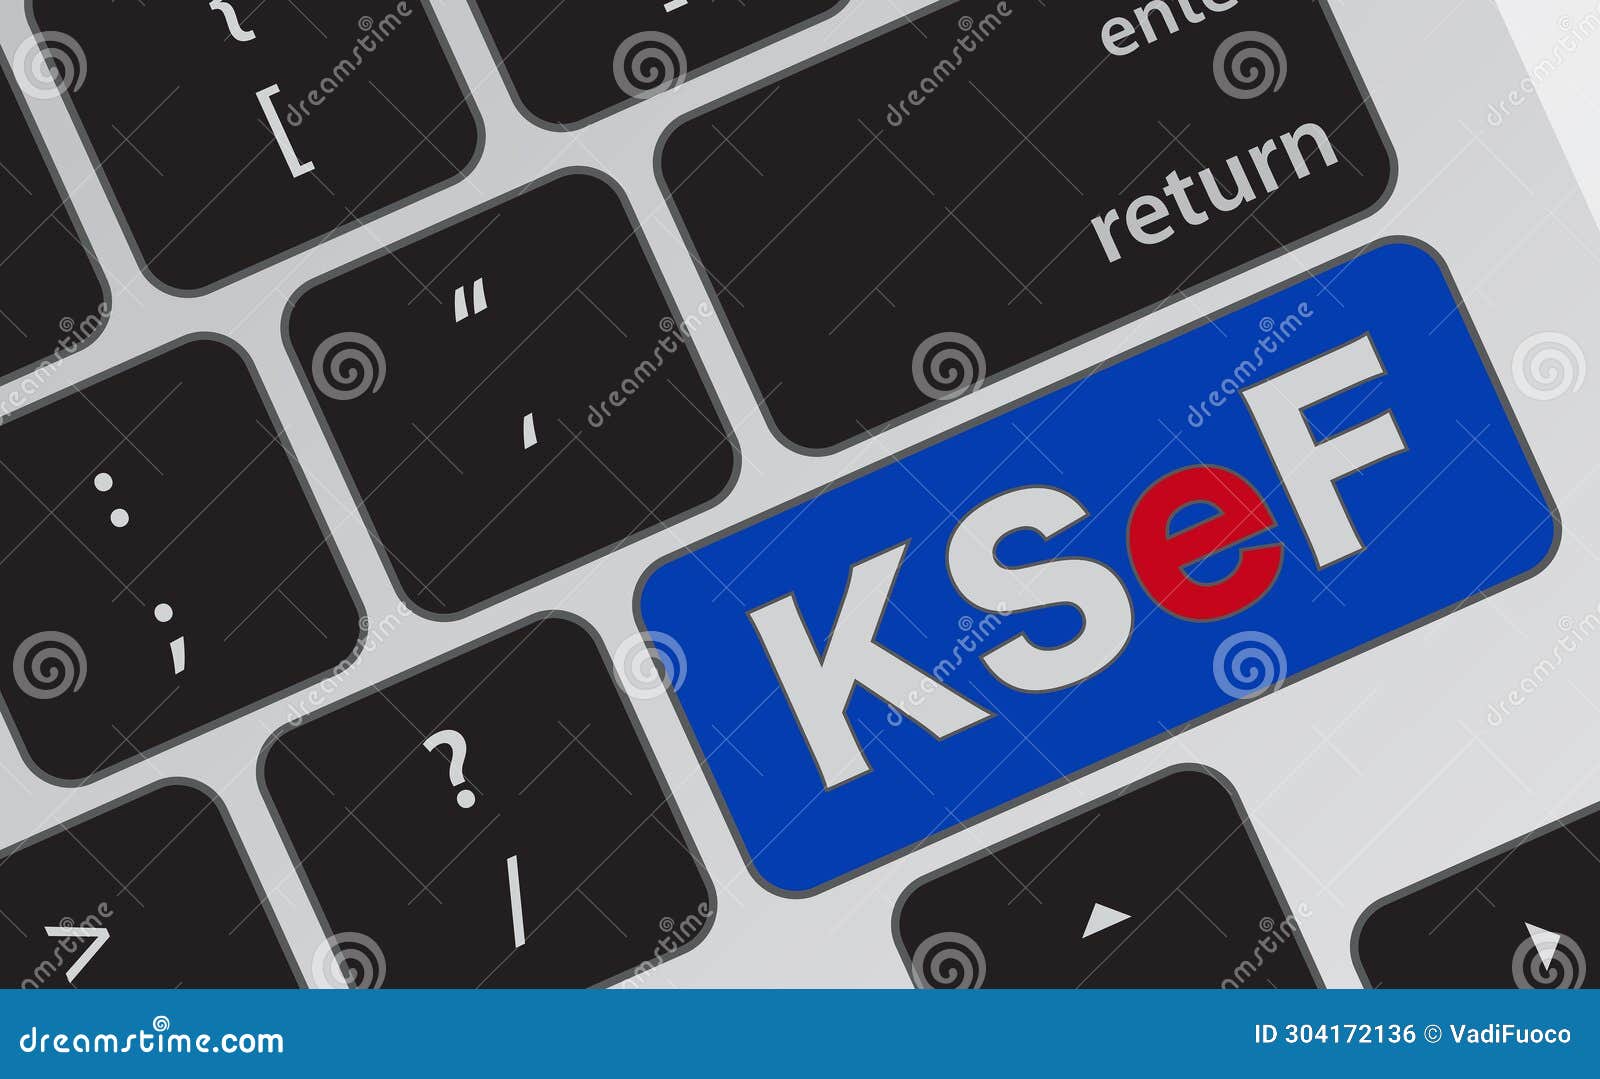 ksef, krajowy system e faktur, text written on a laptop keyboard